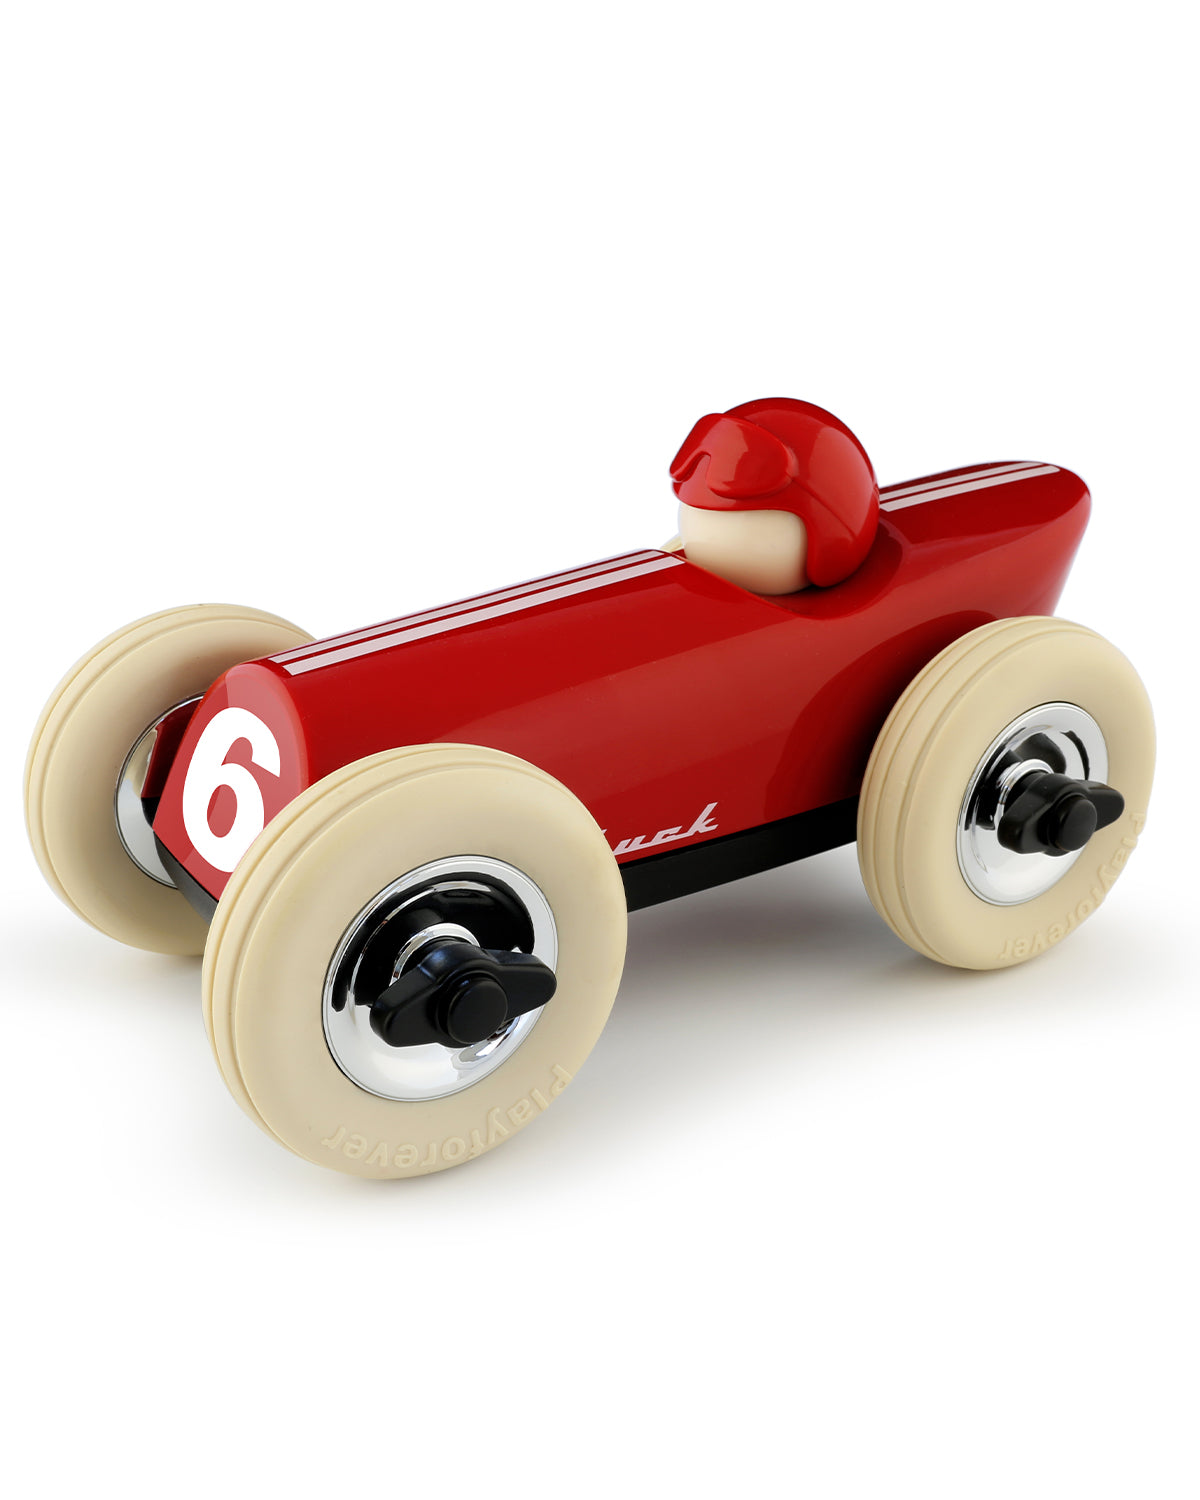 Playforever Toy Car MIDI BUCK Red